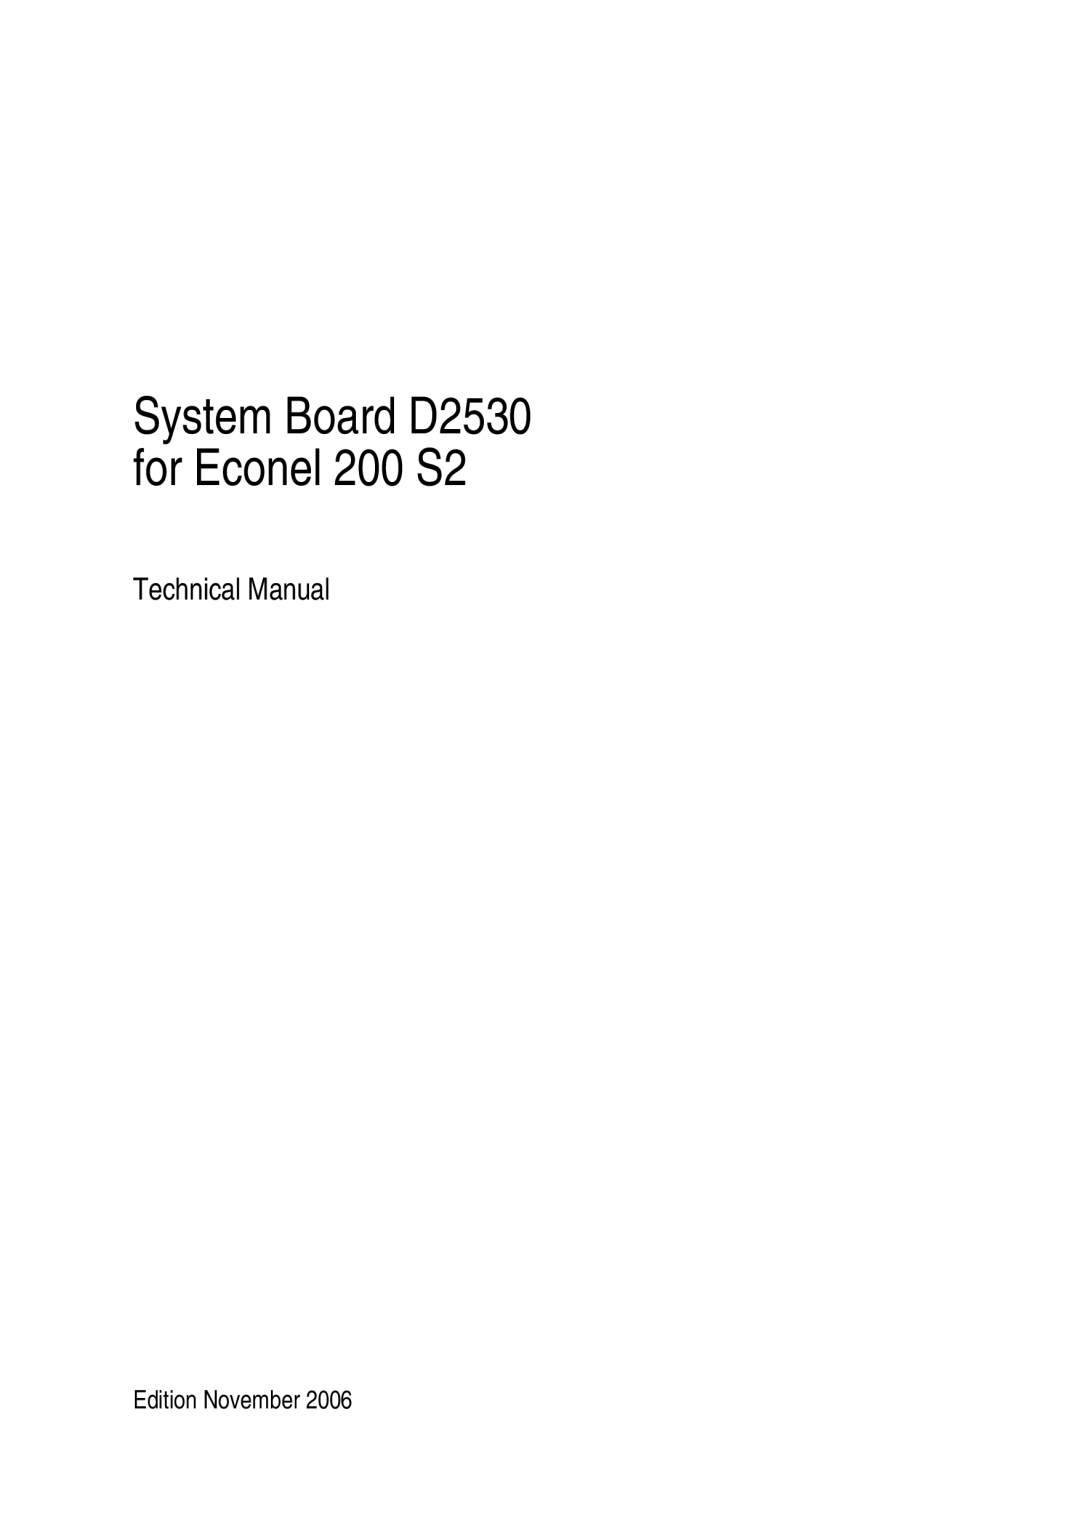 Fujitsu technical manual System Board D2530 for Econel 200 S2, Edition November 